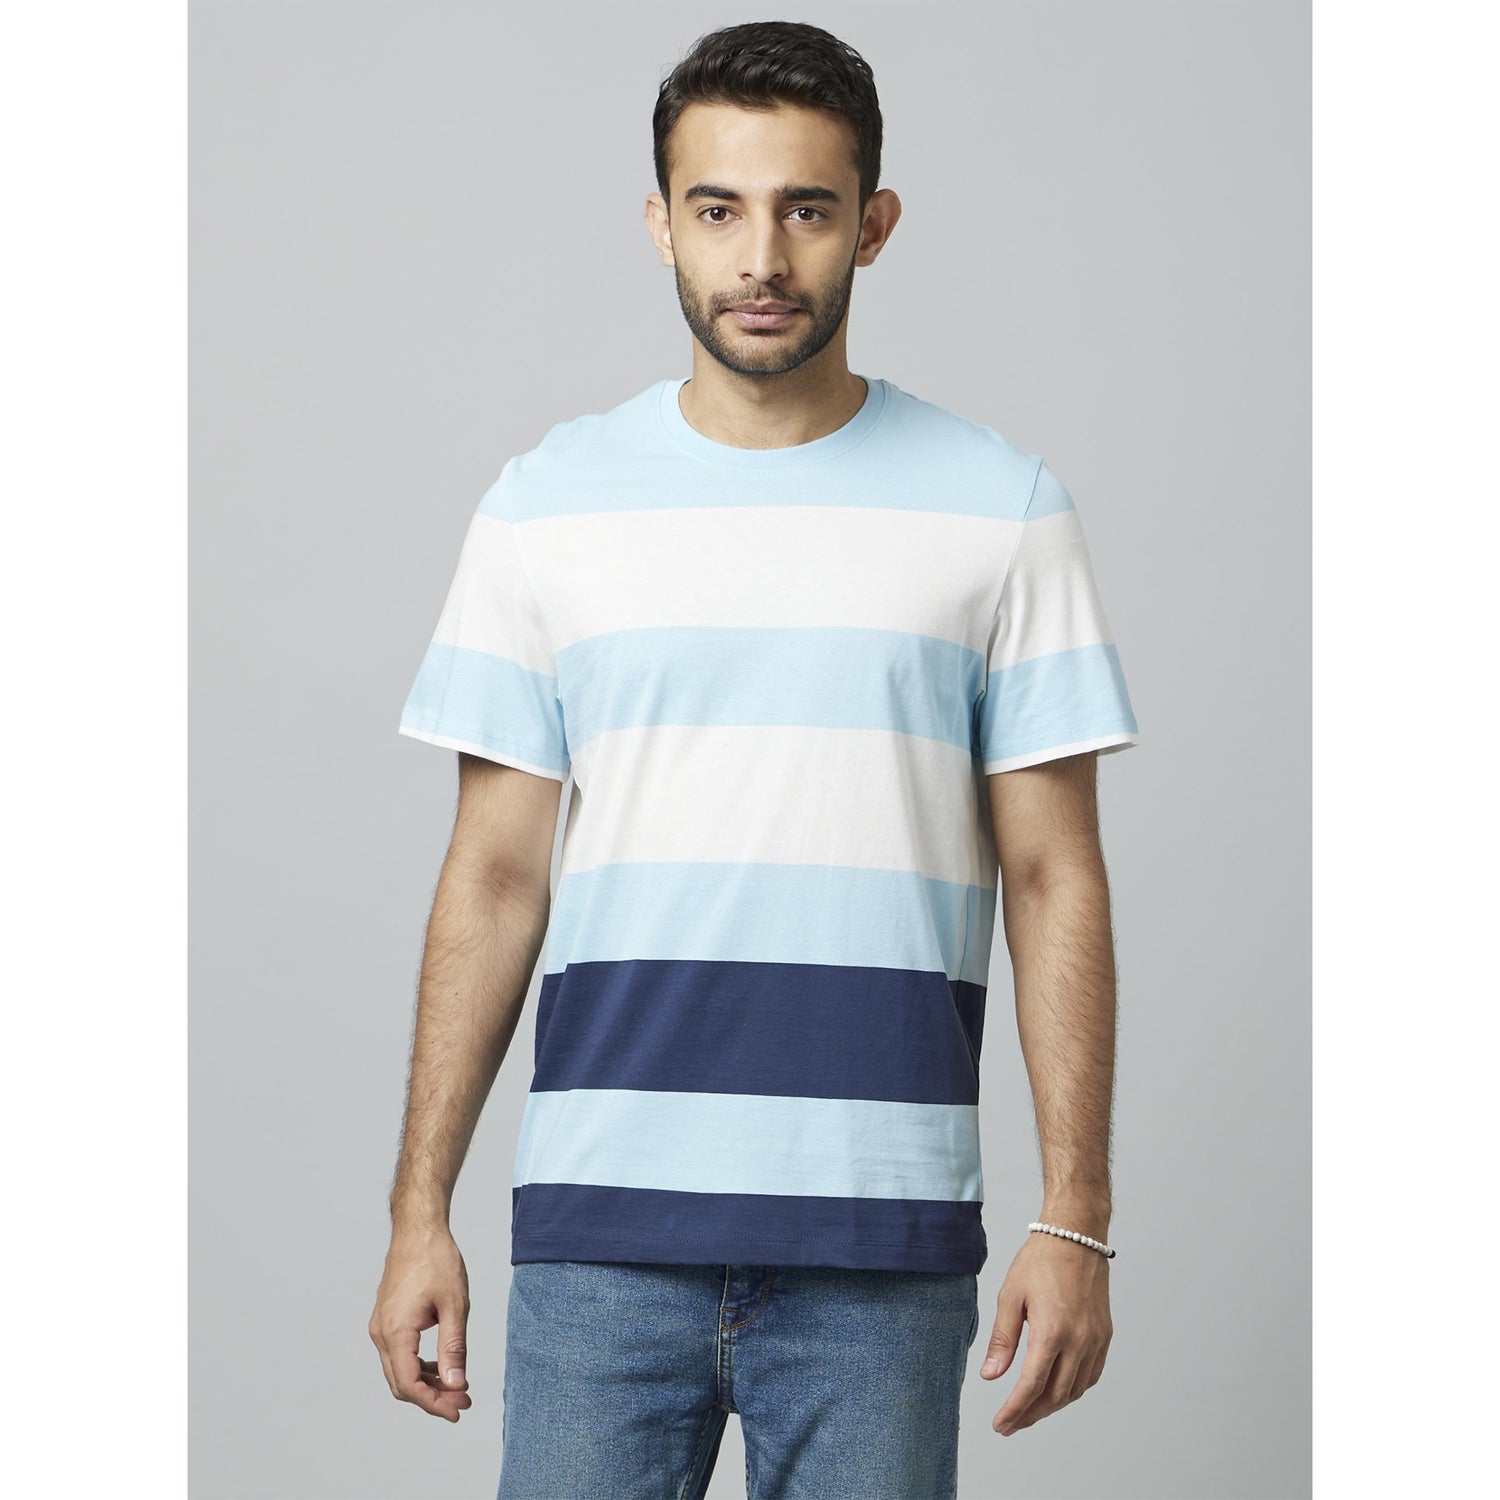 Blue Striped Short Sleeves Round Neck Tshirt (DEMILLE)